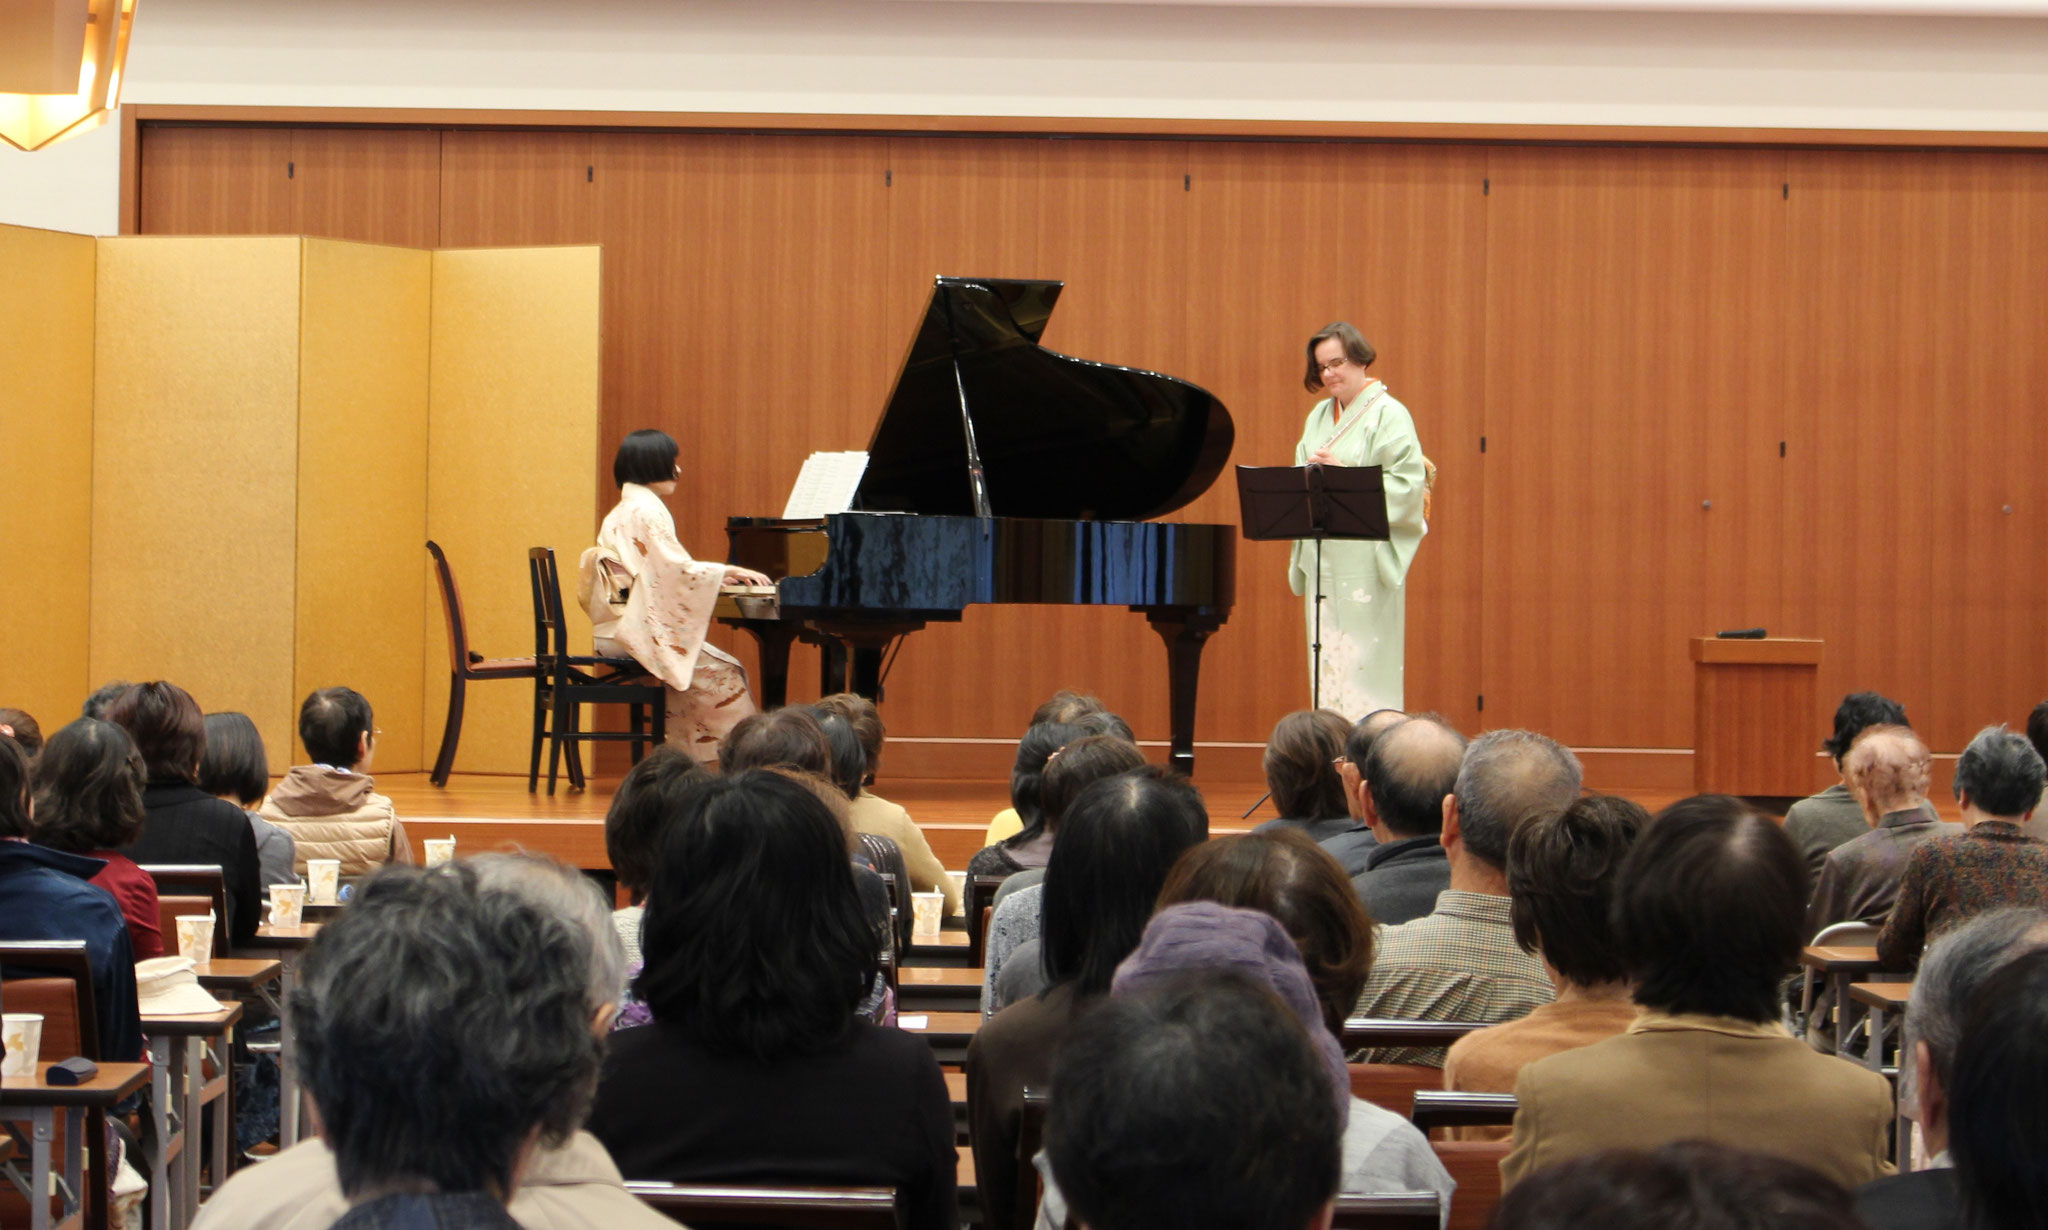 Concert with a flutist Alicja Molitorys, in Tsu, Japan